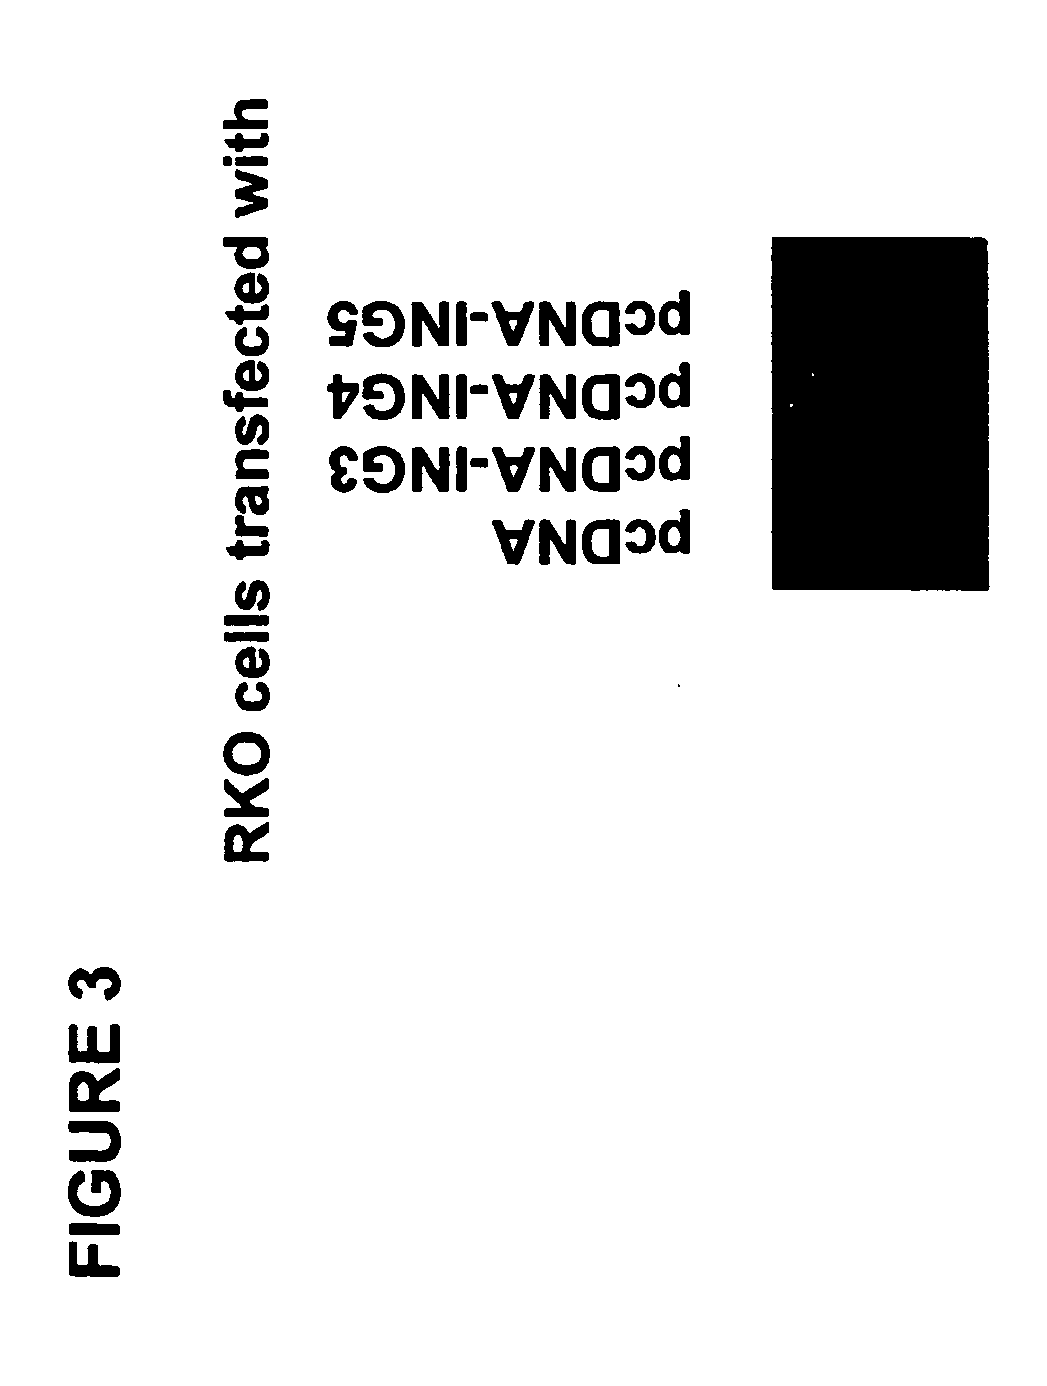 Tumor suppressor gene, p28ing5